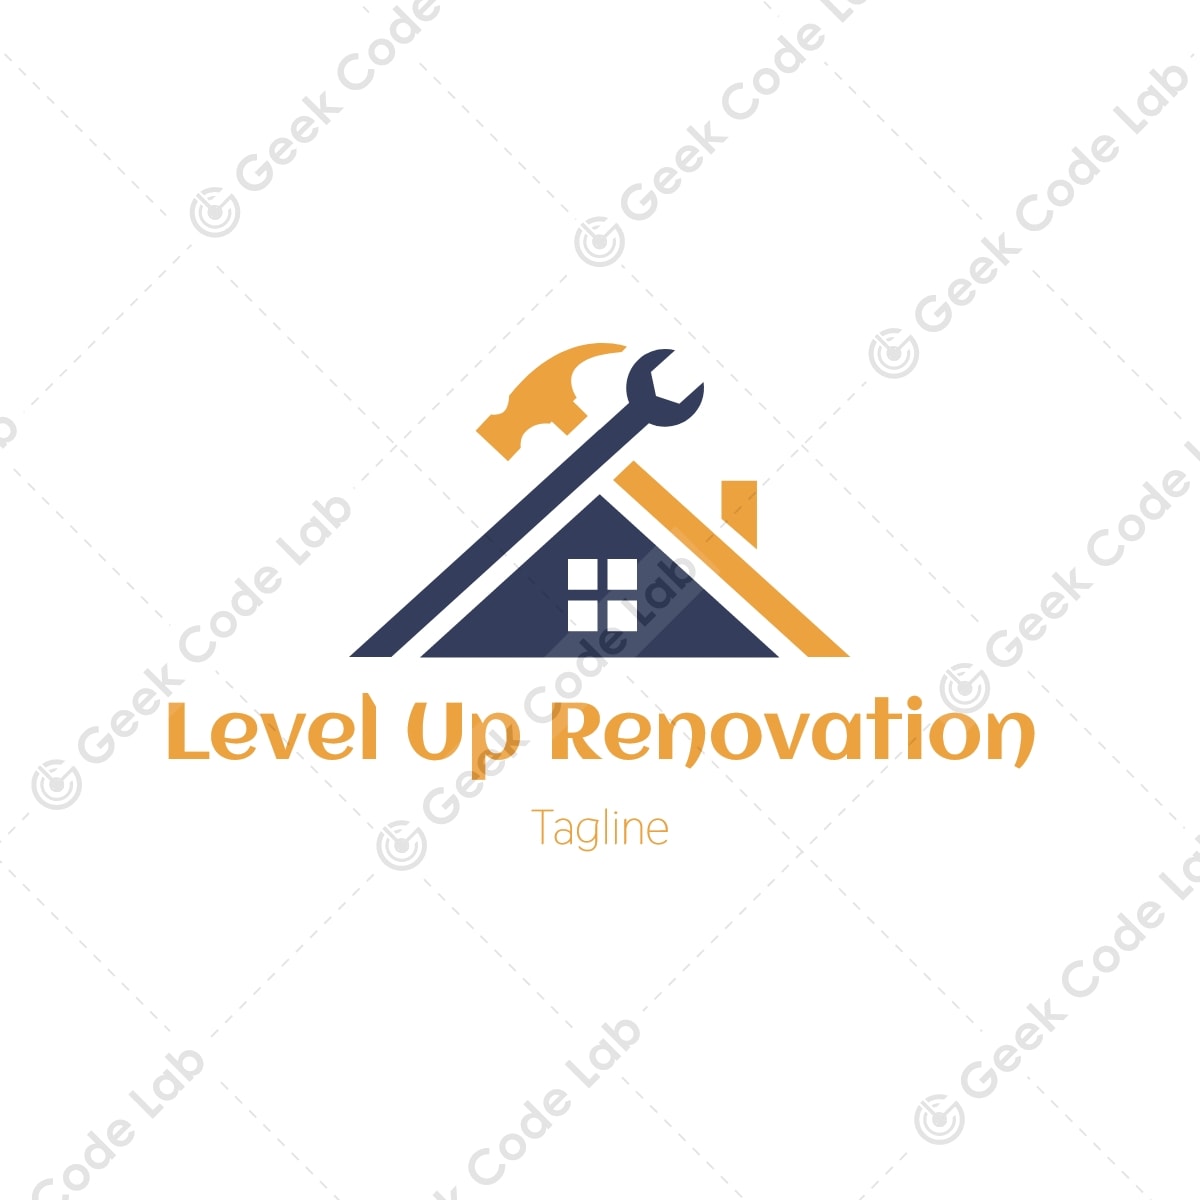 Level Up Renovation